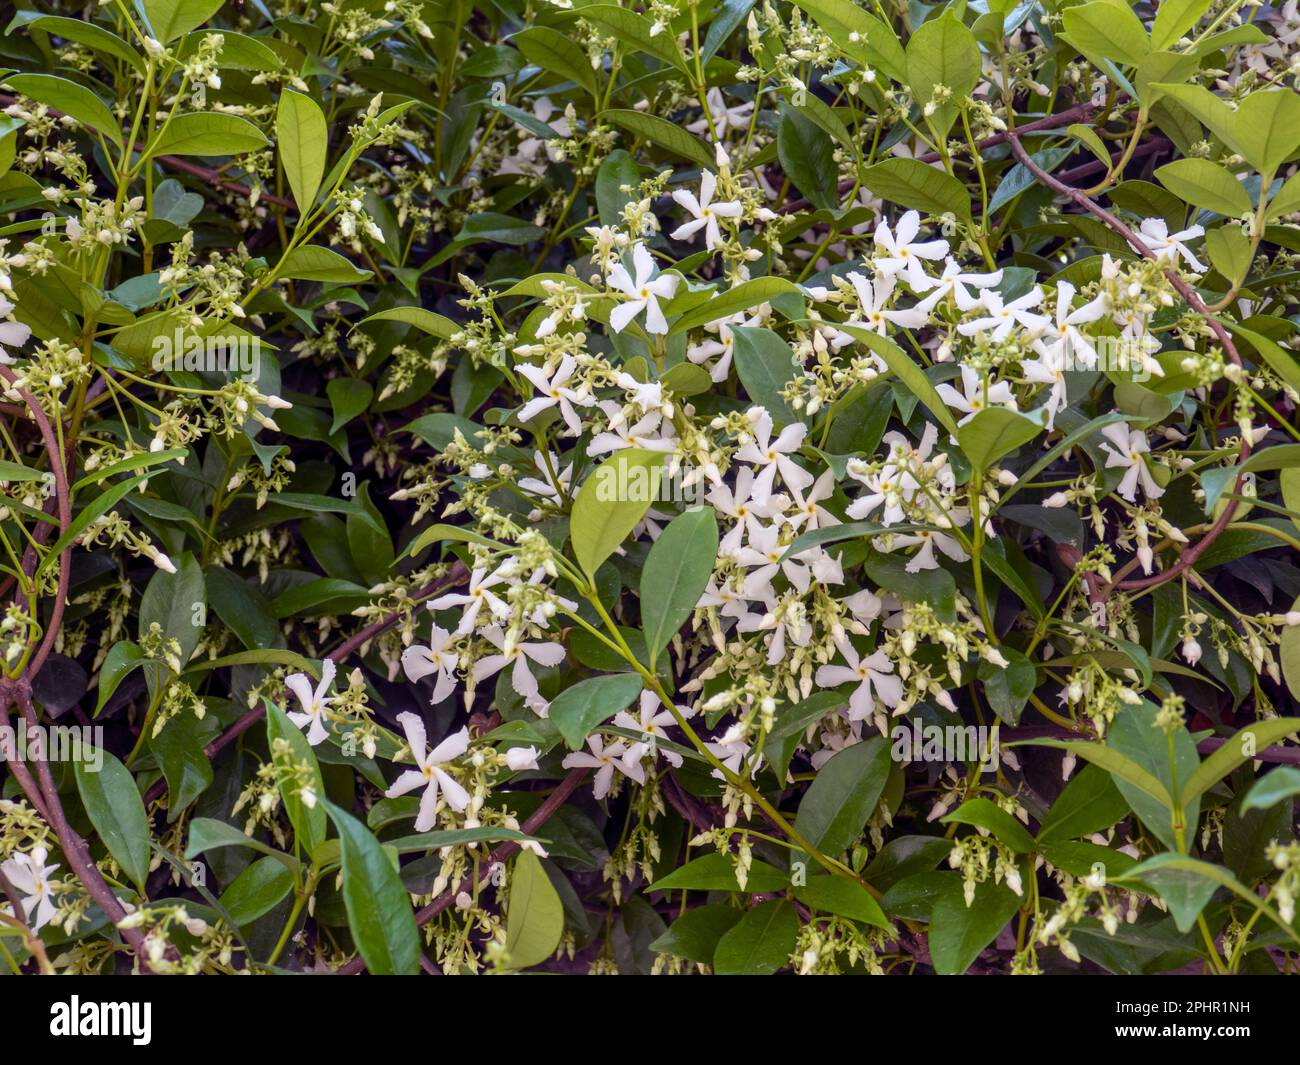 Star jasmine flowers on a blooming bush Stock Photo